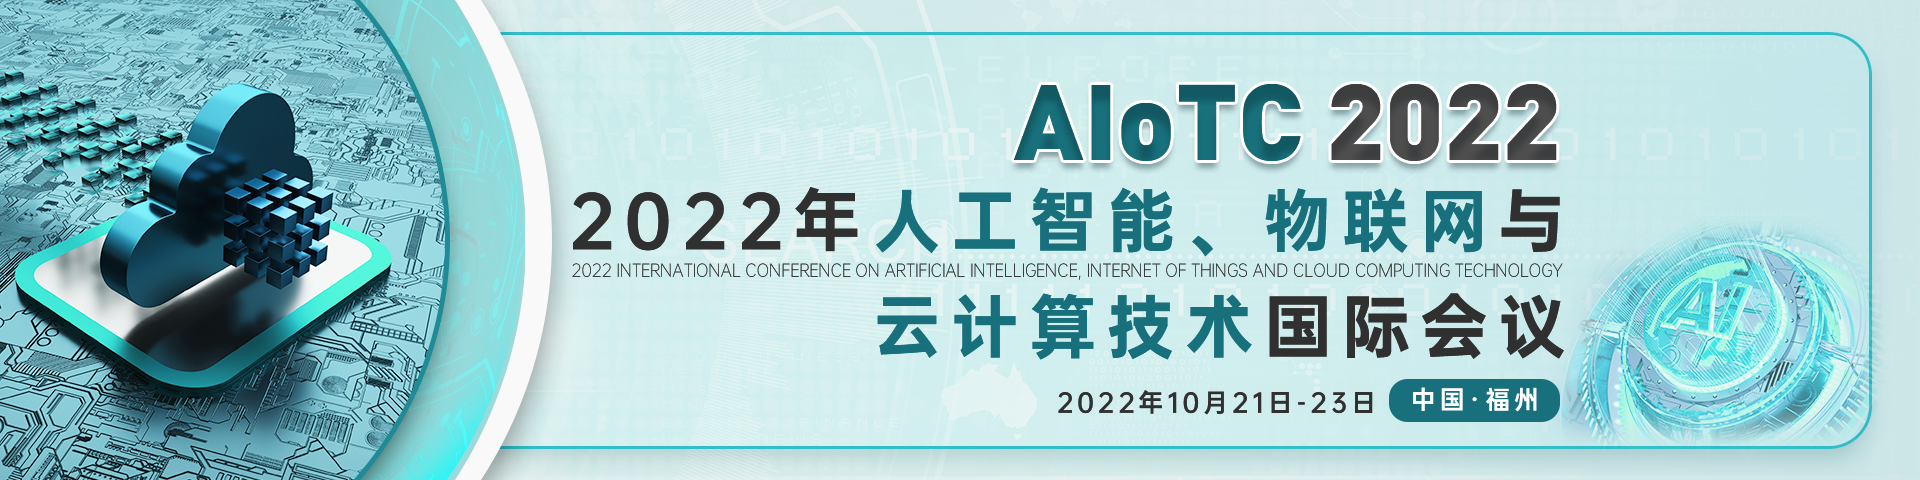 10月福州AIoTC2022-会议官网中文banner-何雪仪-20211231.png